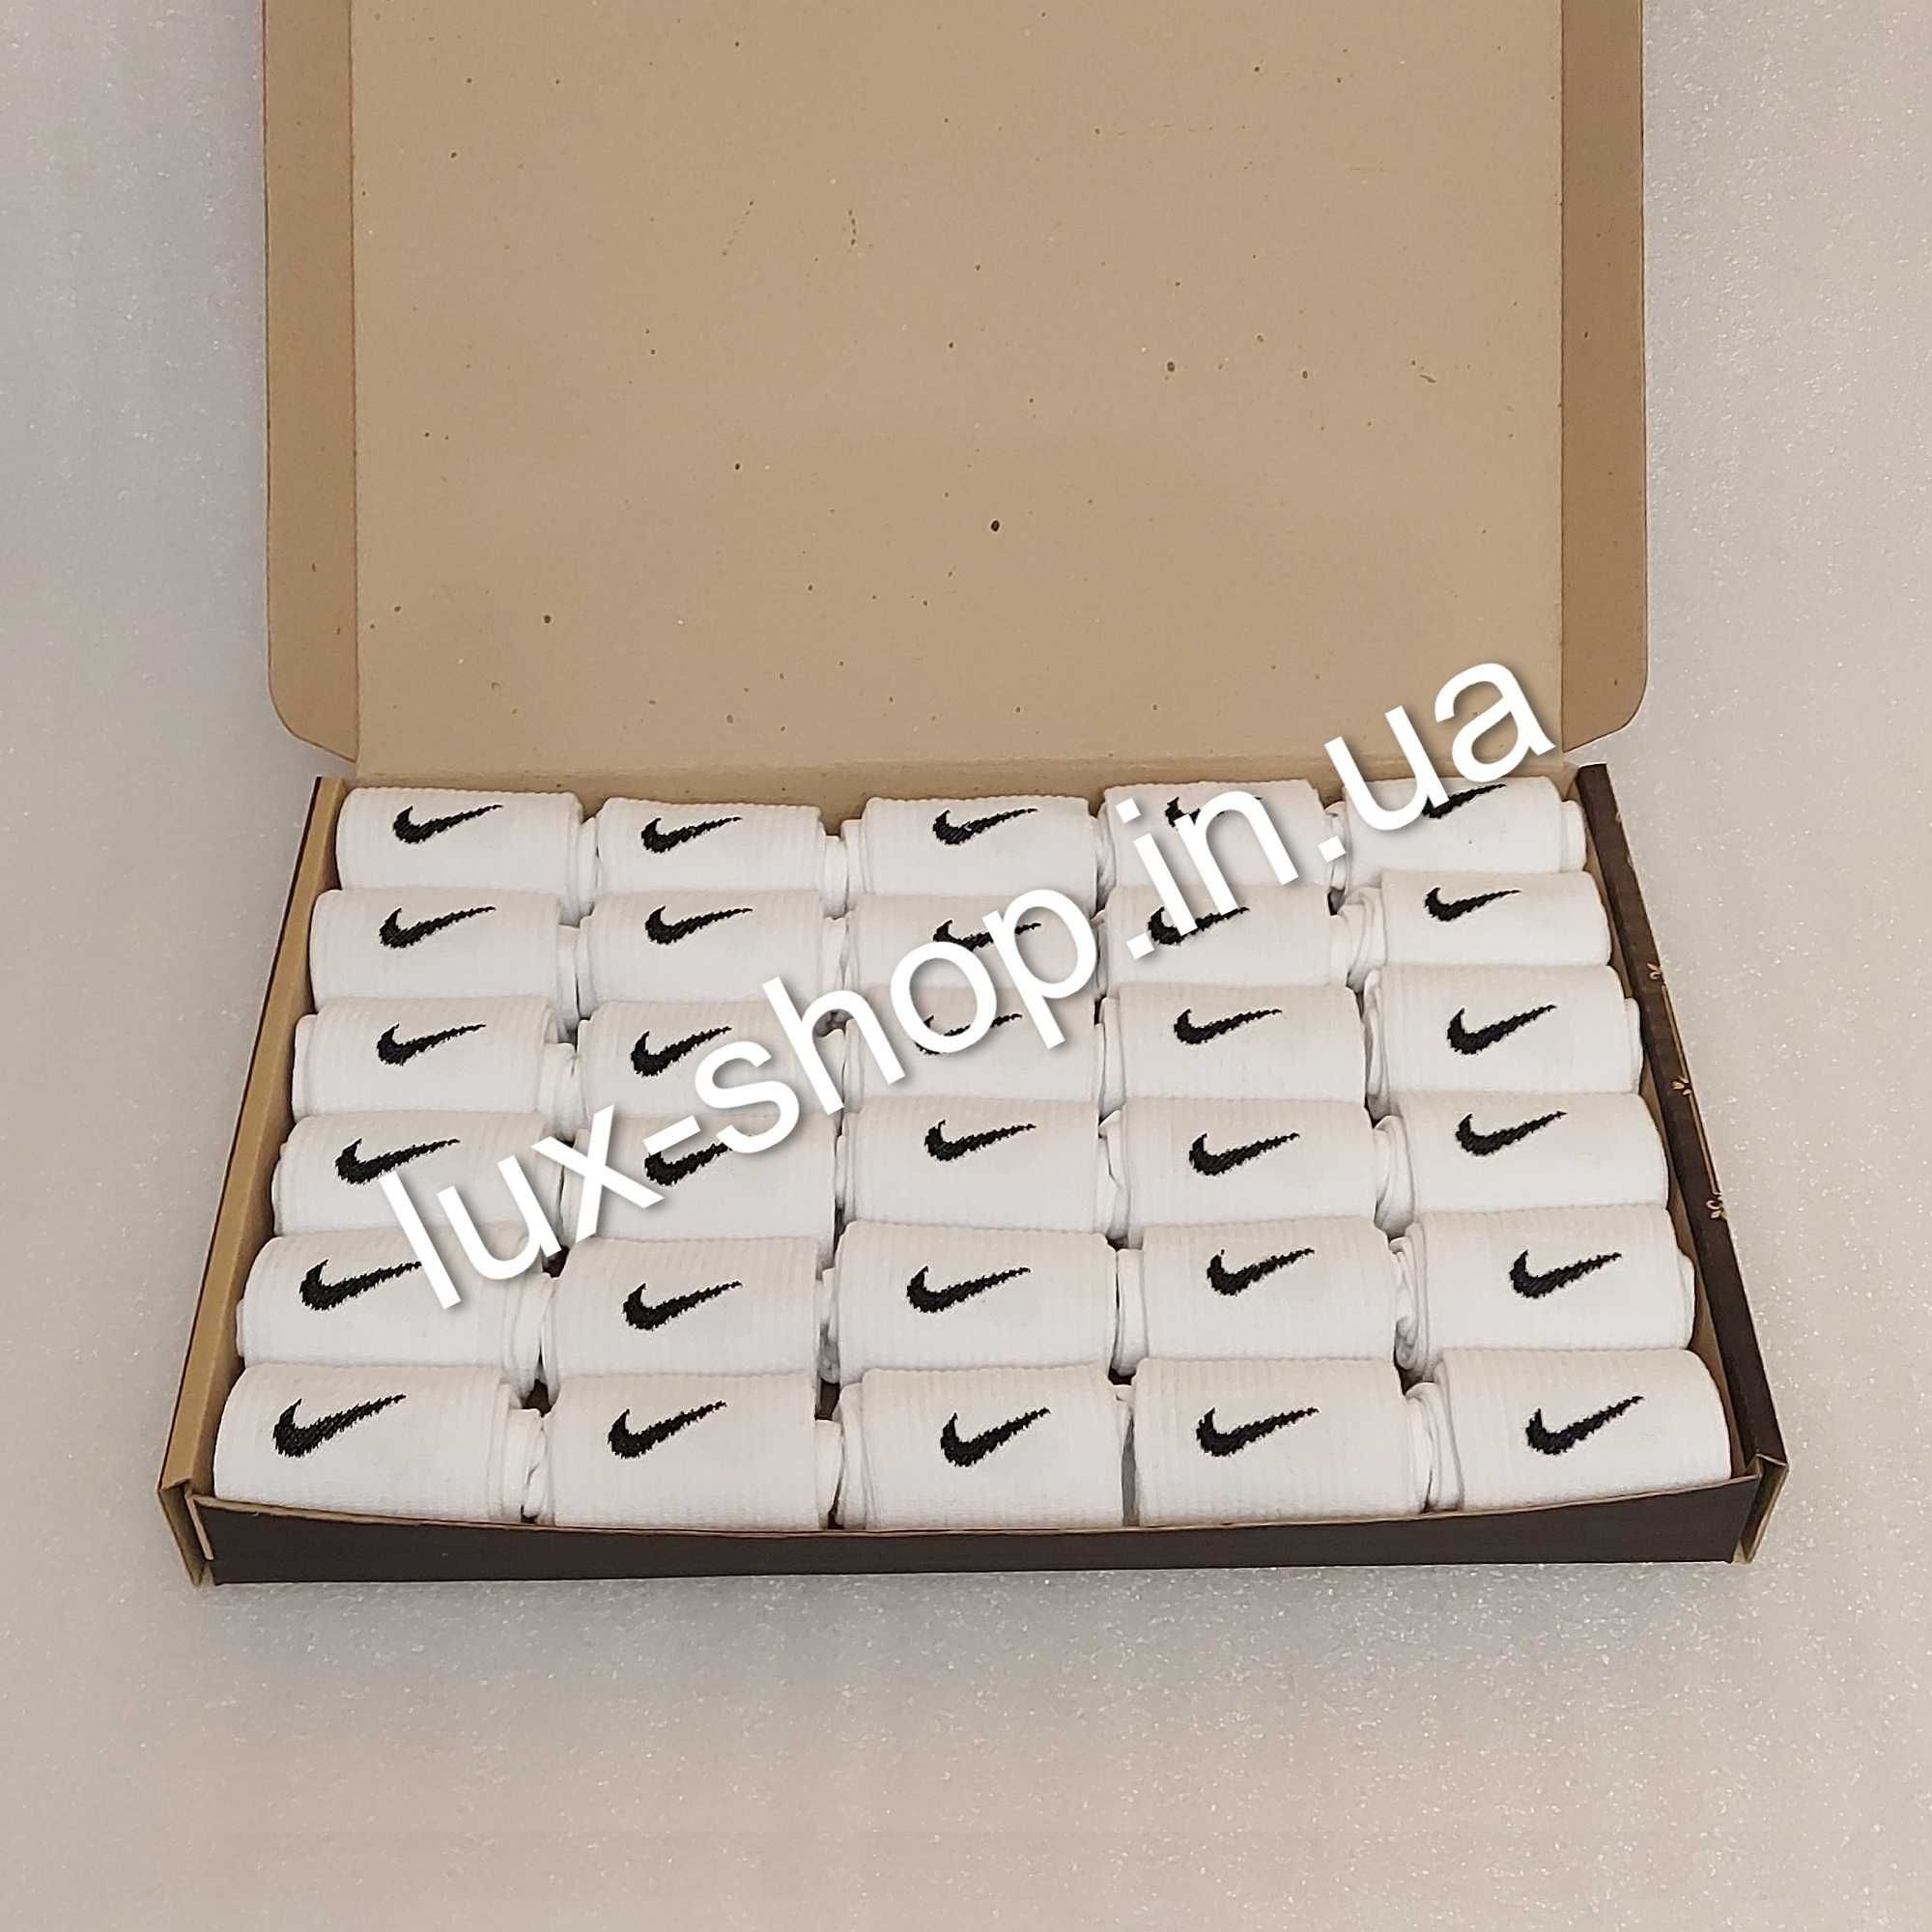 Шкарпетки Nike в коробке 30 пар (высокие) носки найк (супер качество)